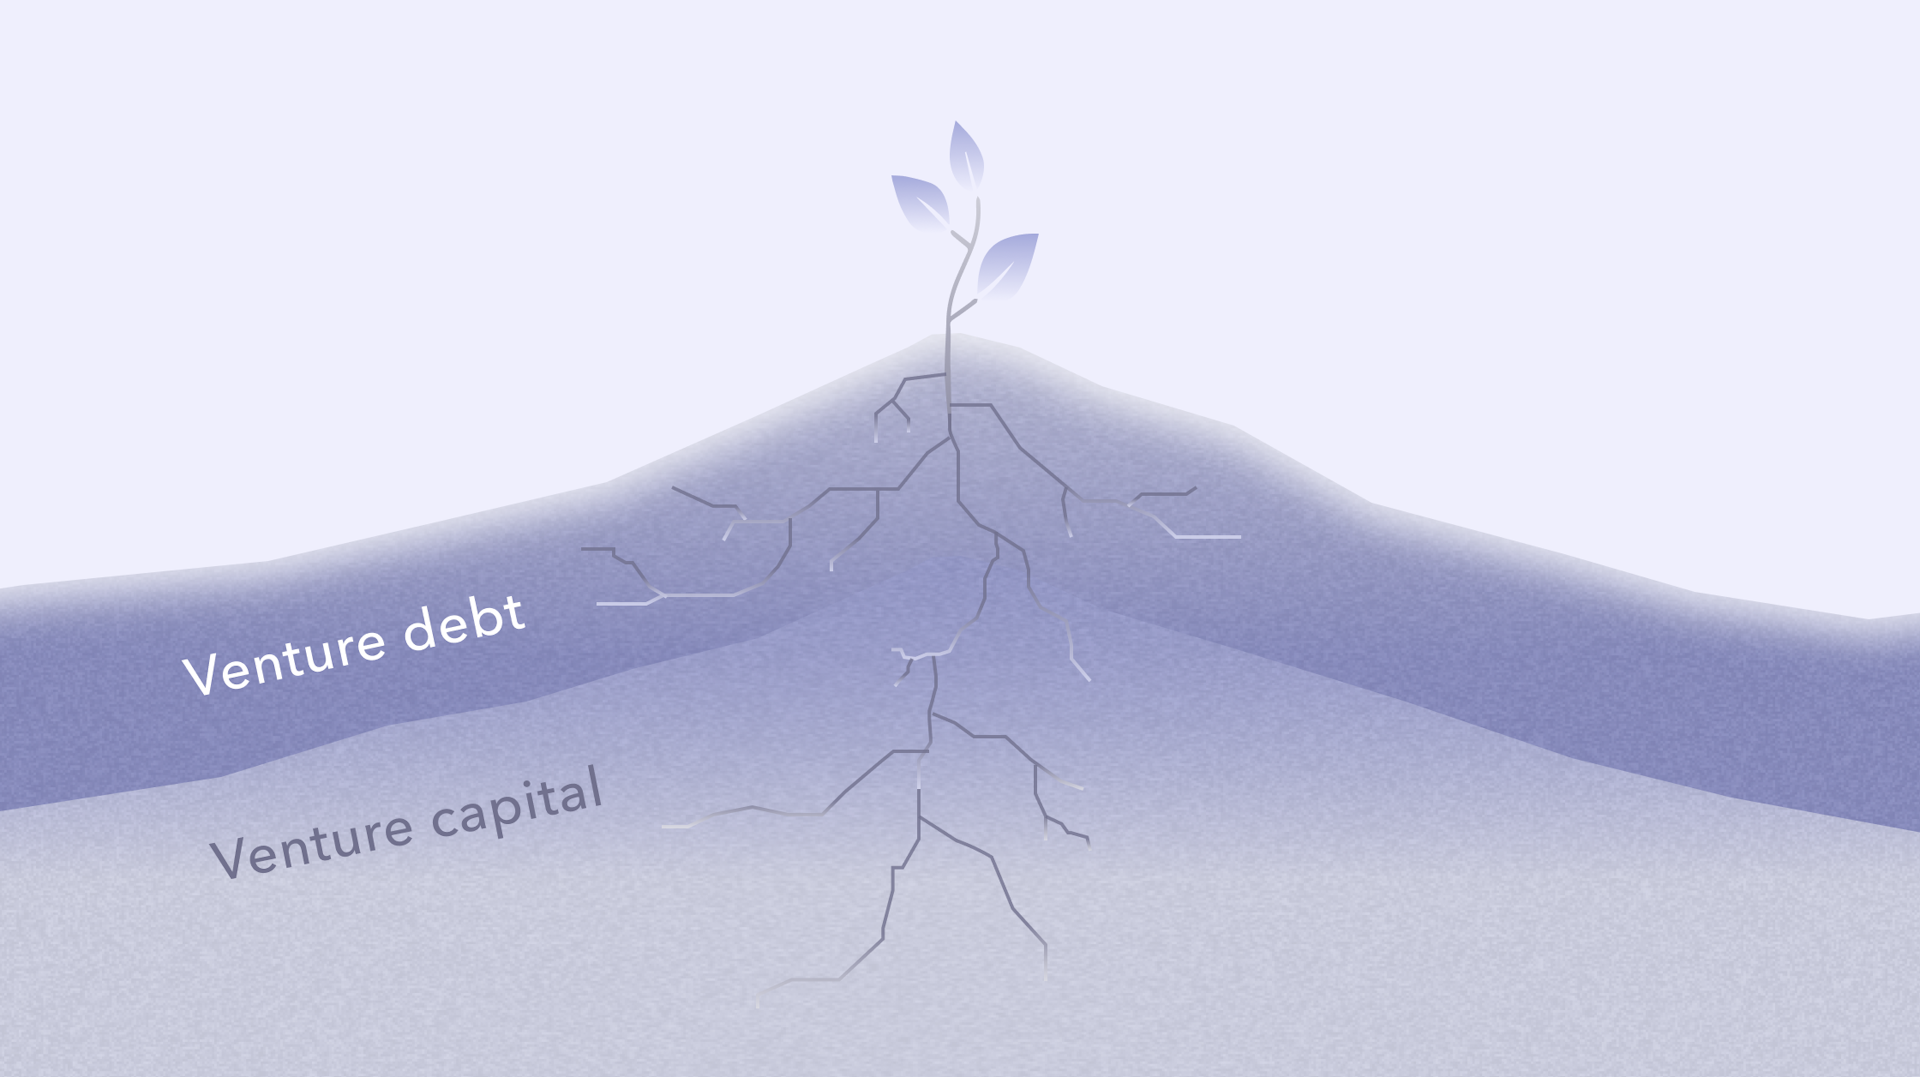 Illustration depicting venture debt and venture capital like plant roots